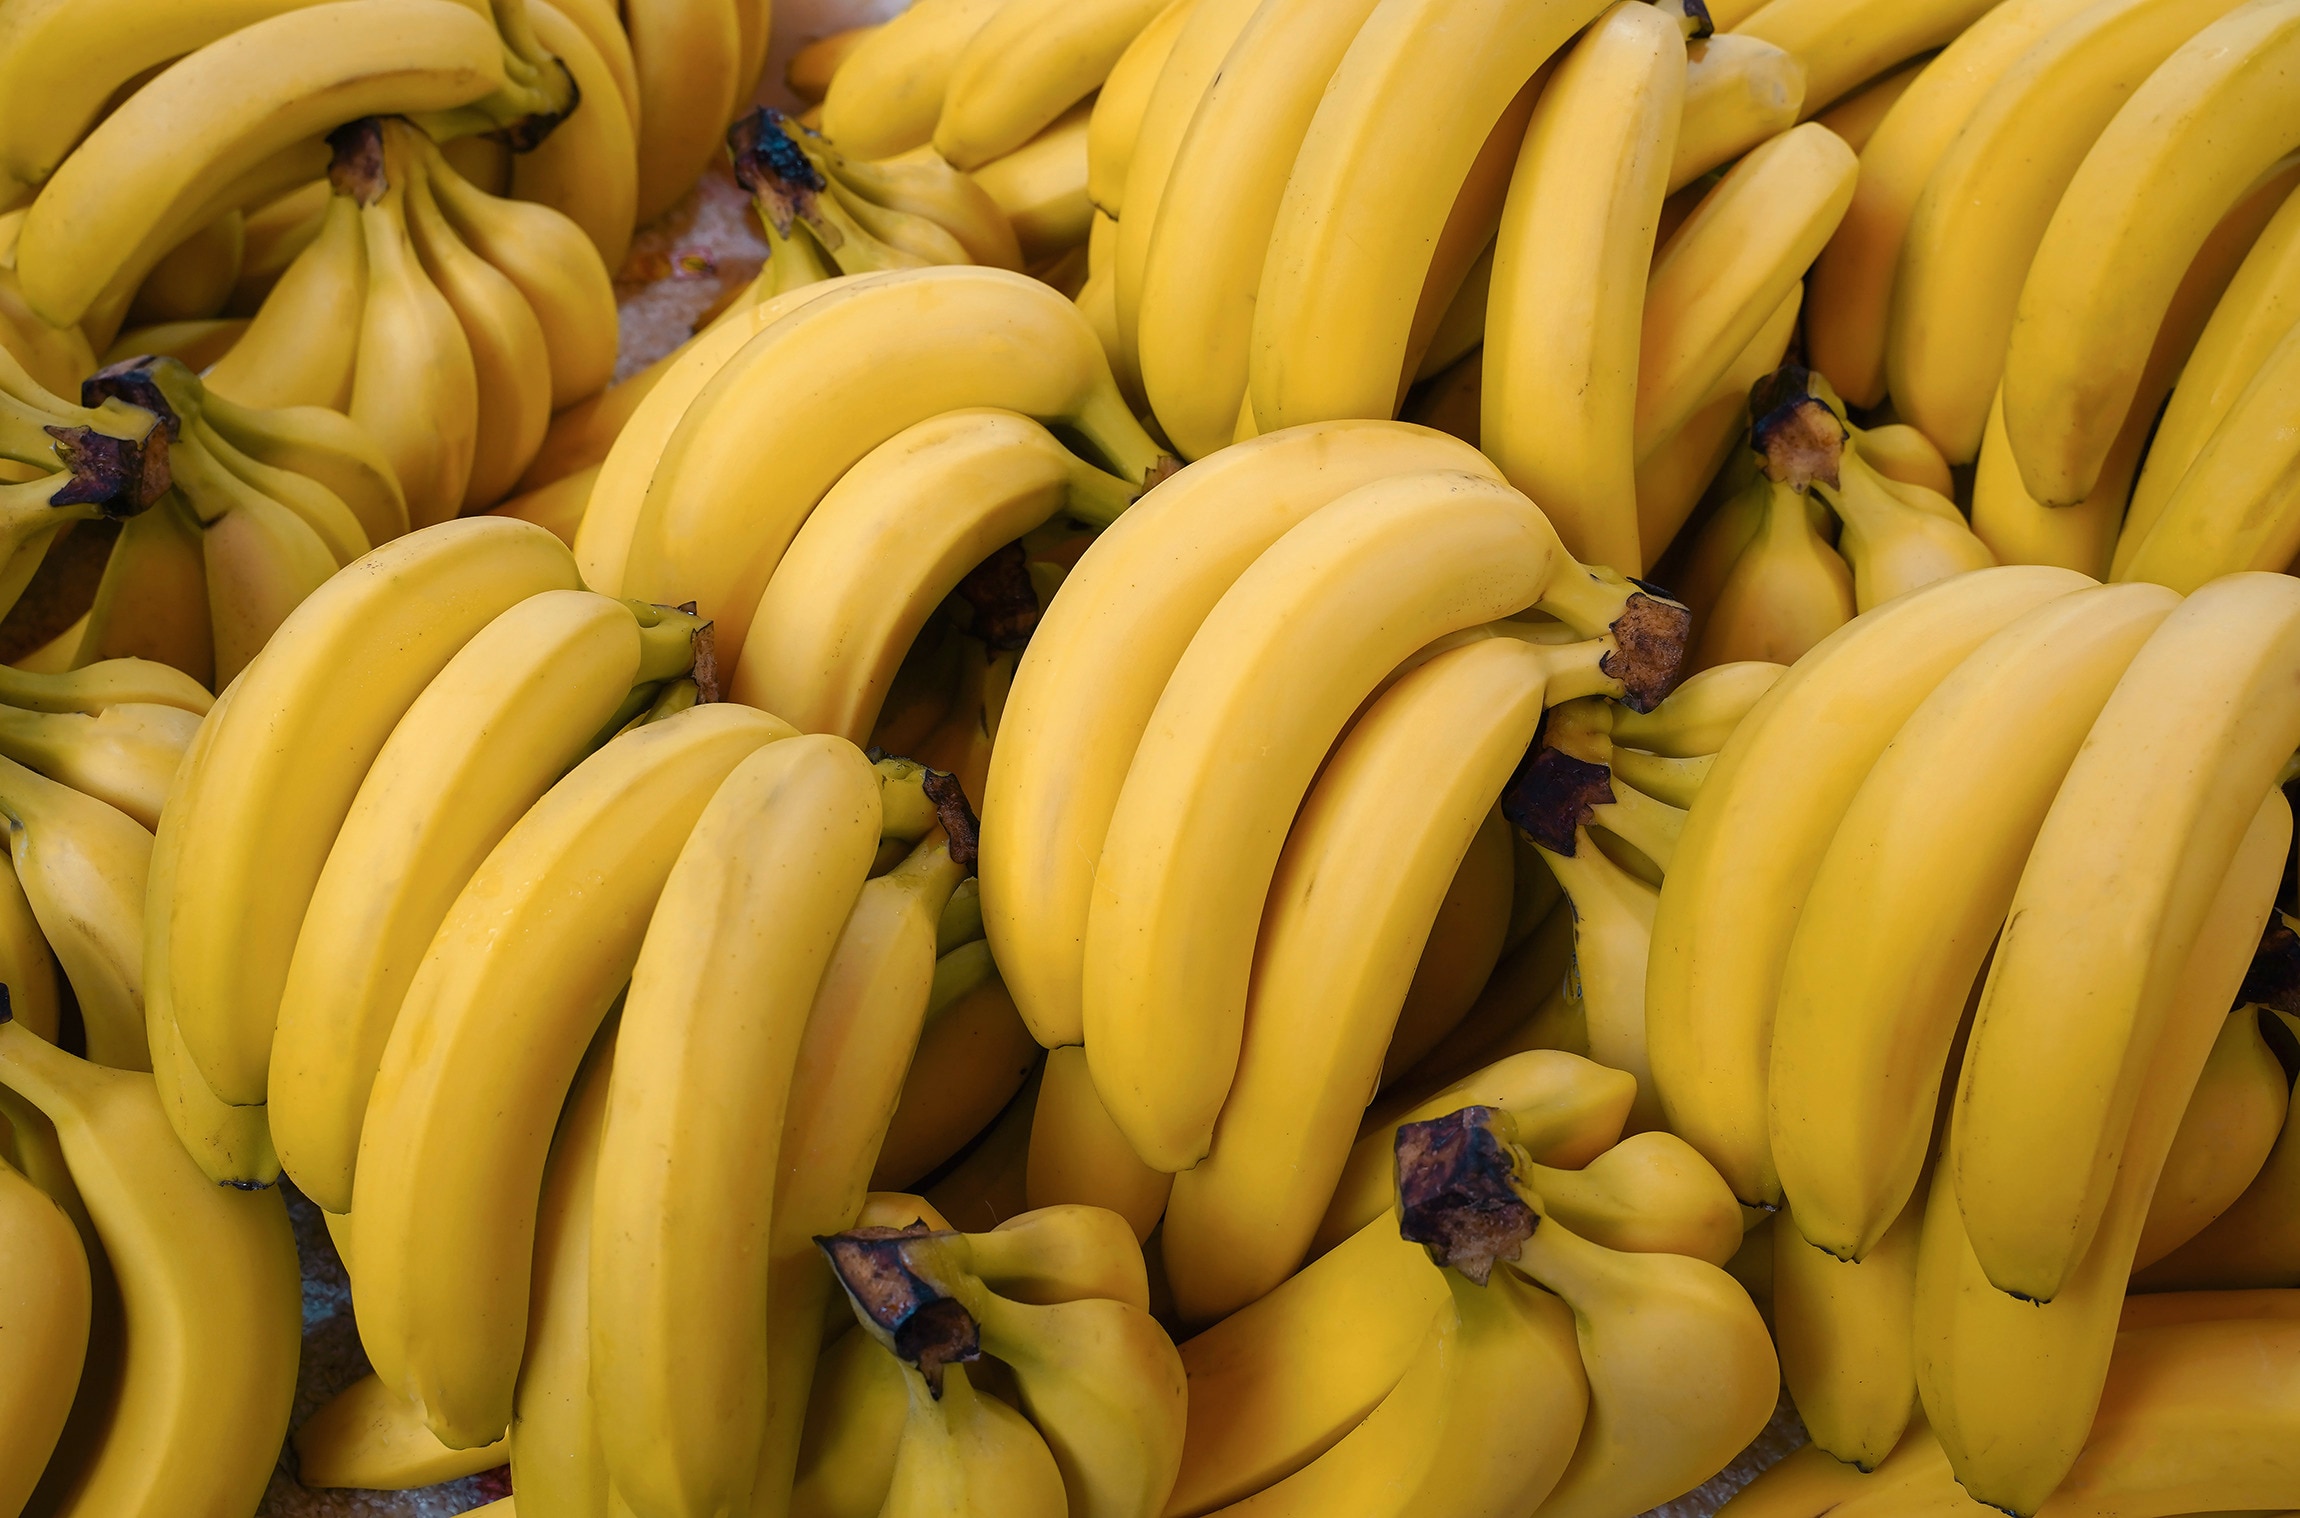 Fresh ripe bananas in a market stall